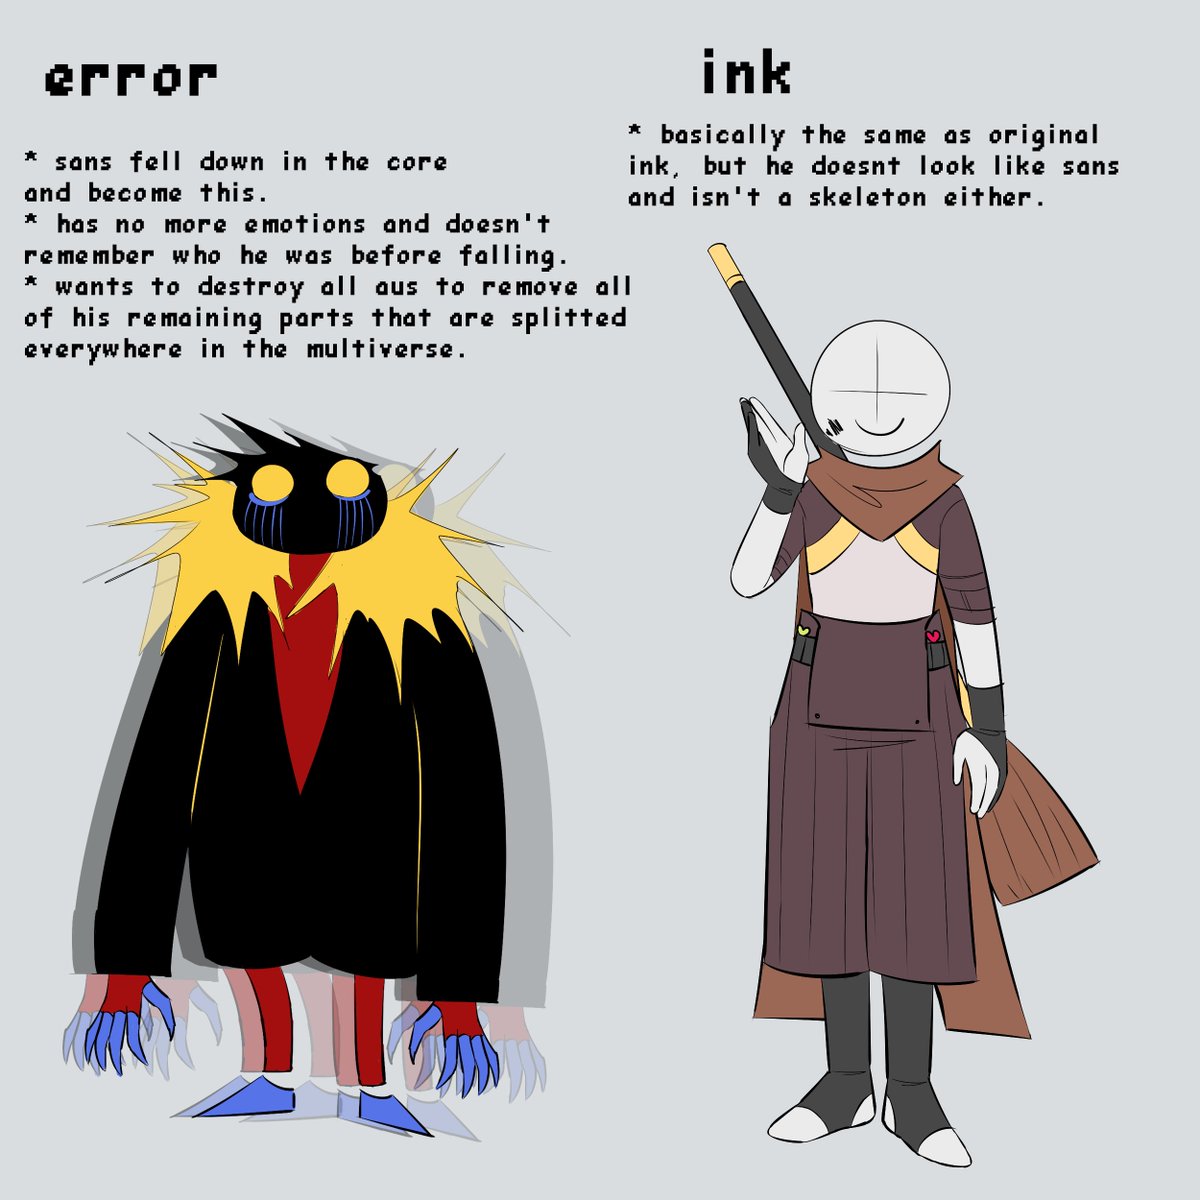 my take on ink and error
#inksans #errorsans